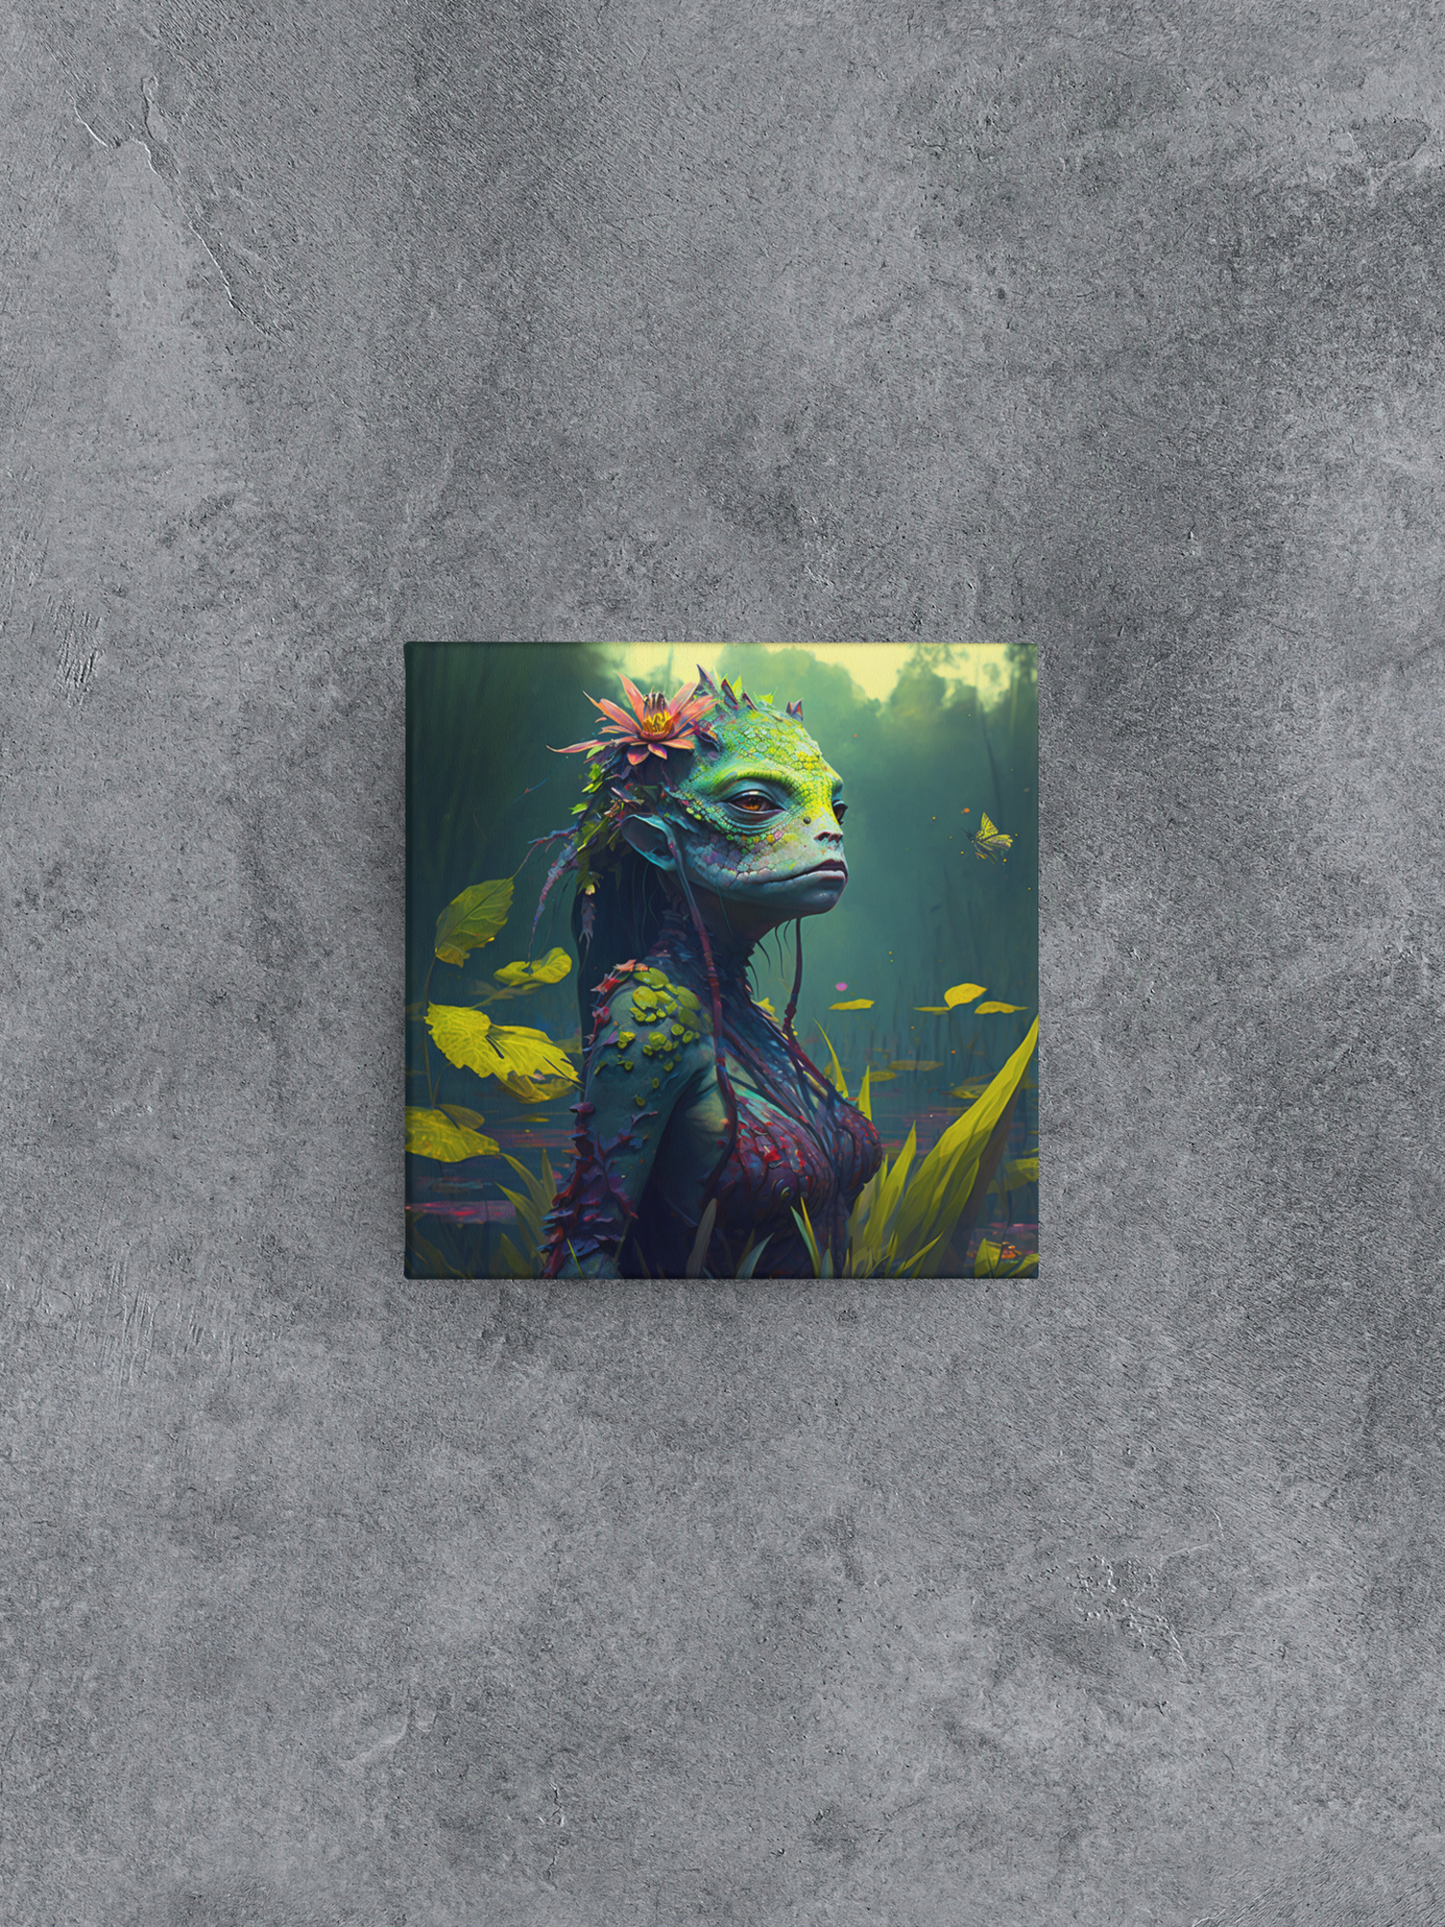 Lizard Woman Standing in a Swamp Canvas Wall Art, Fantasy DnD Lizardfolk Canvas Print